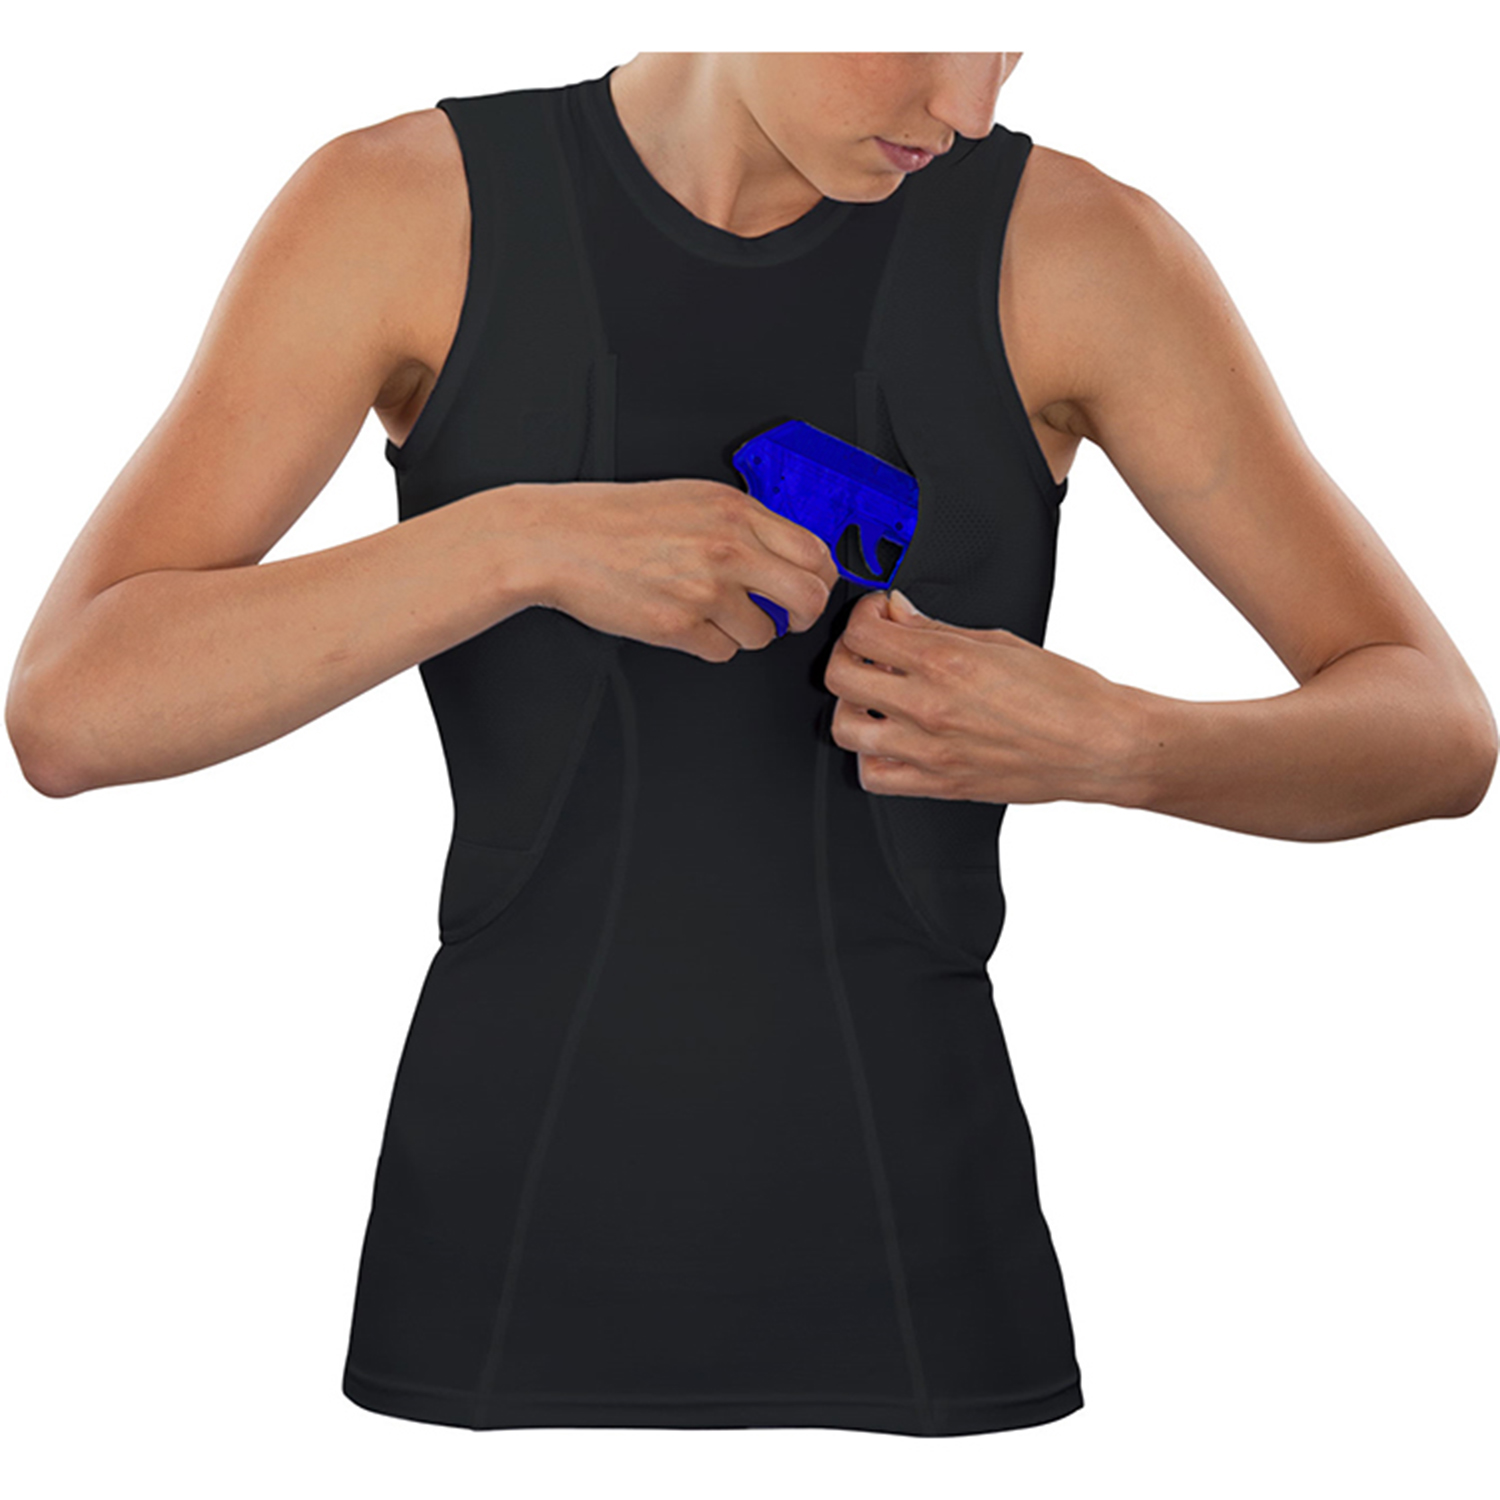 5.11 Tactical Women's Sleeveless Holster Shirt w/ Tactical Pocket 30012 Black S